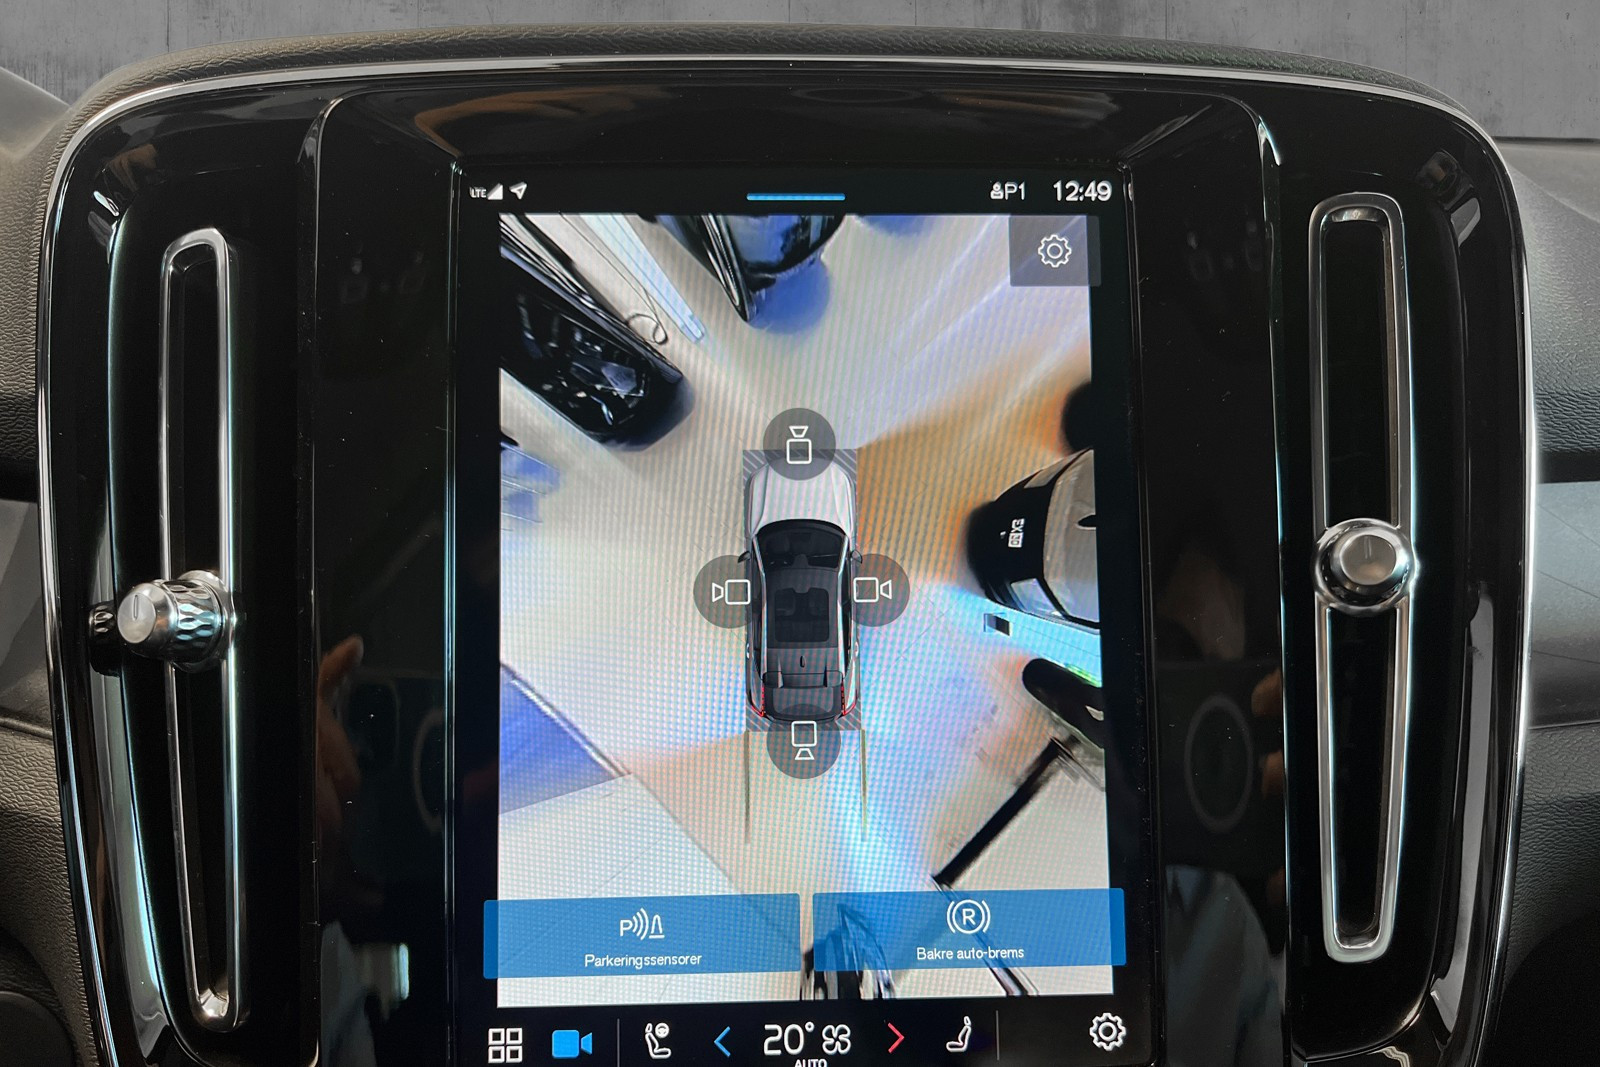 Parkeringskamera 360 som viser oversikt ved parkering